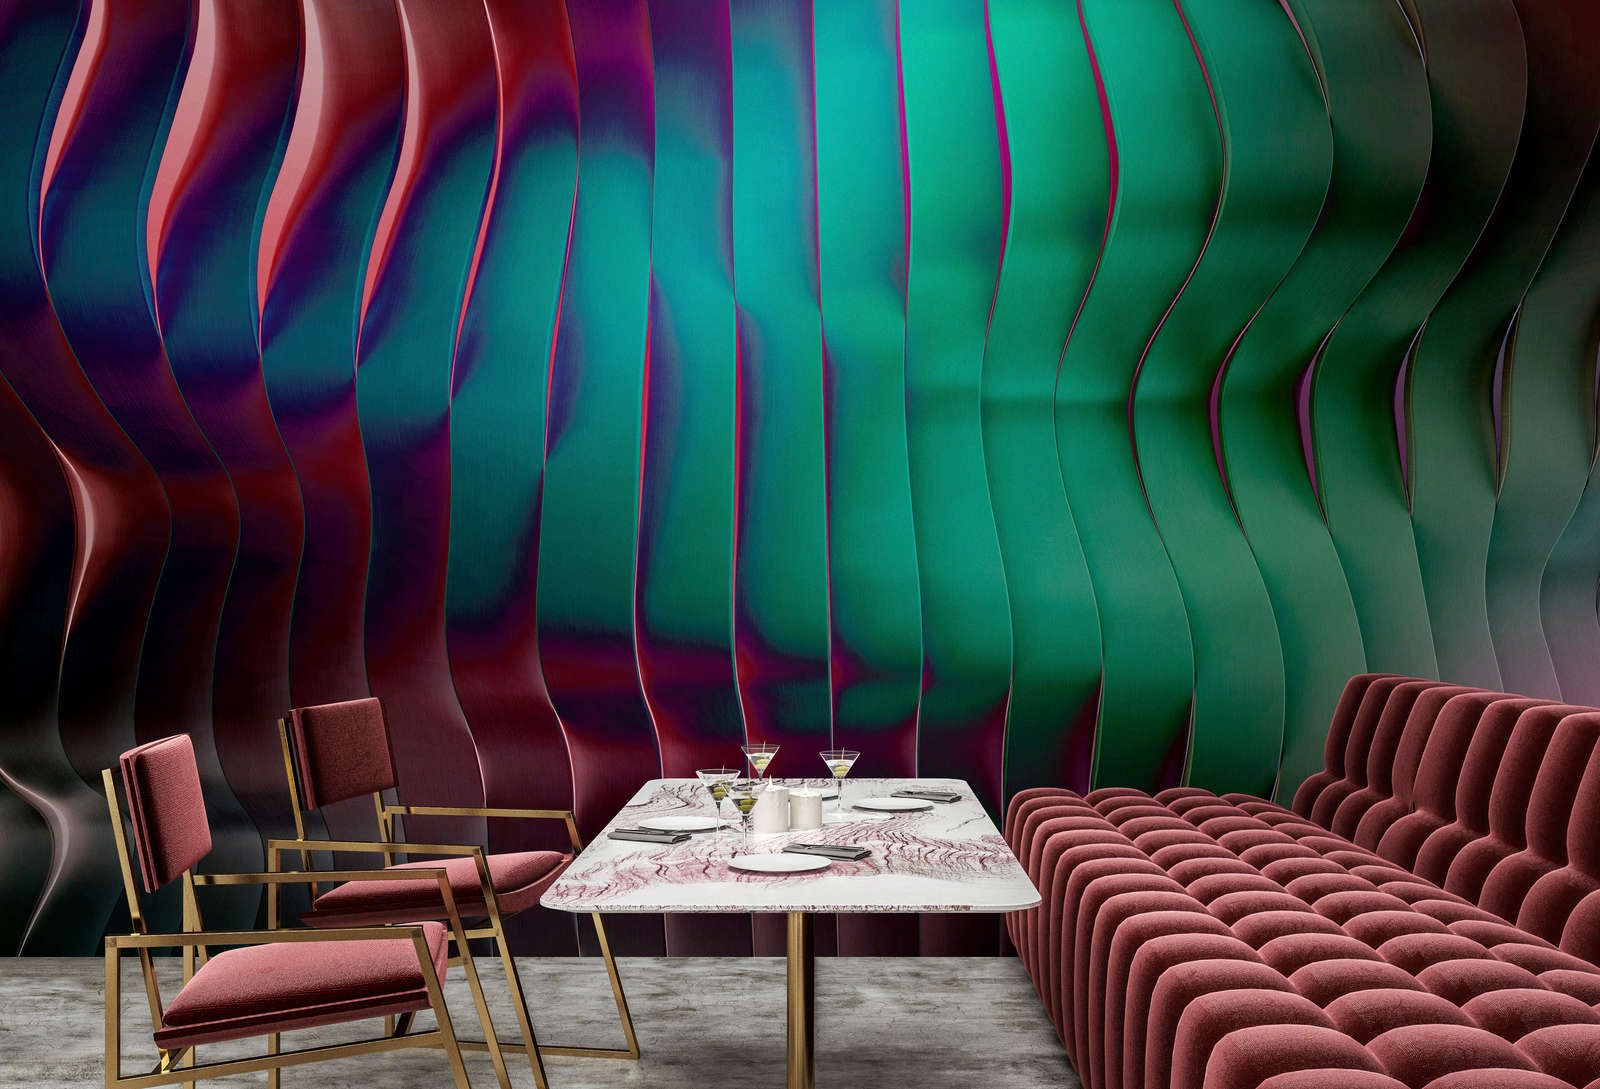             solaris 2 - Papel pintado fotográfico moderno con arquitectura ondulada - colores neón | tejido no tejido de textura ligera
        